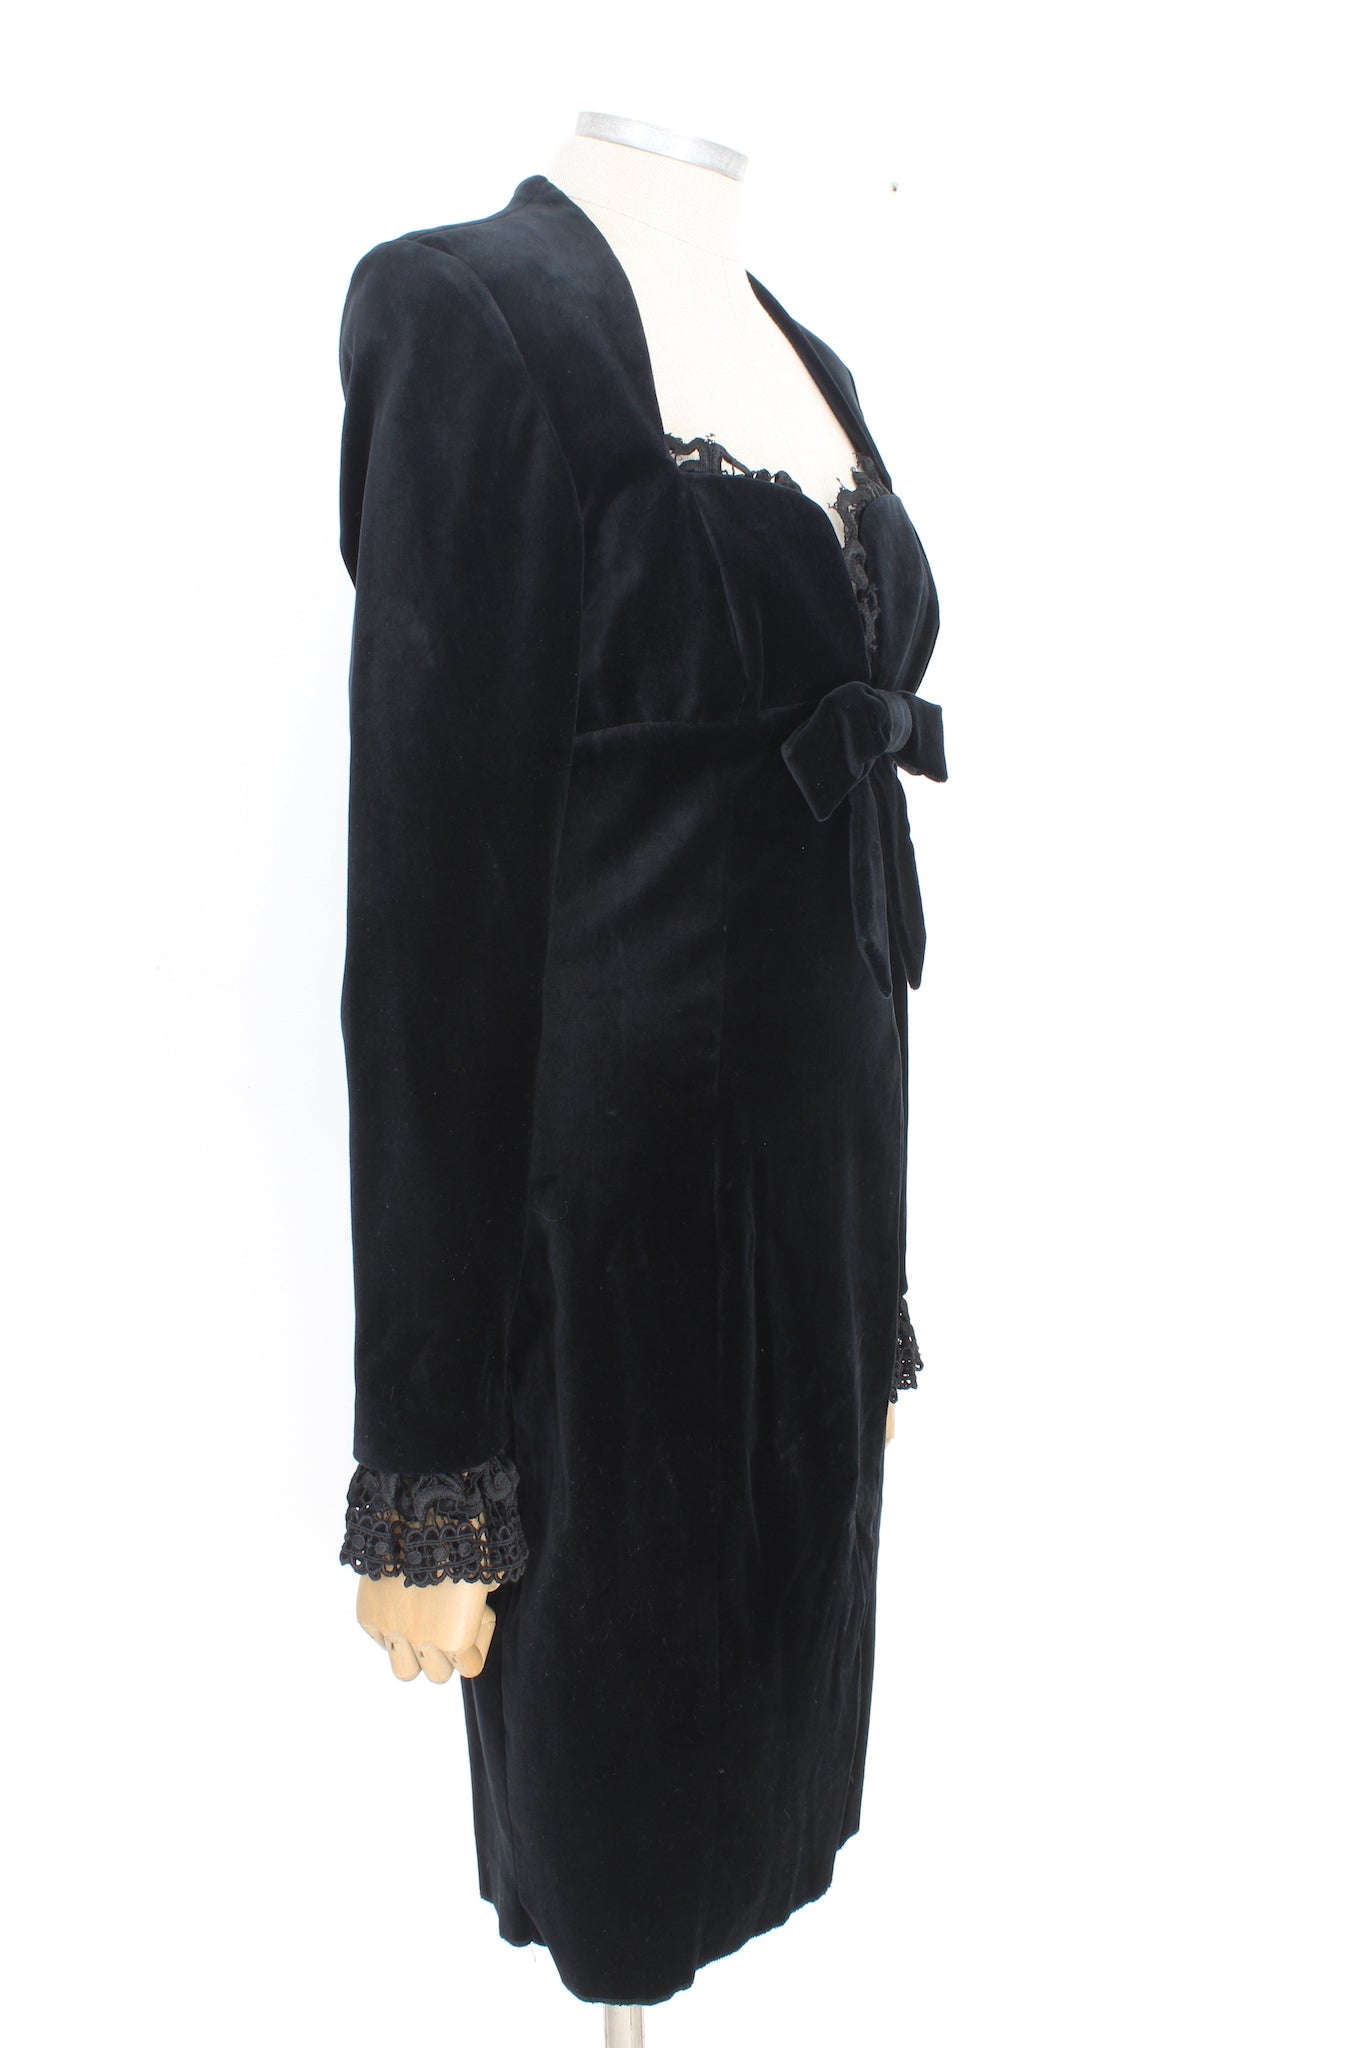 Loretta di Lorenzo Black Velvet Vintage Evening Dress 80s